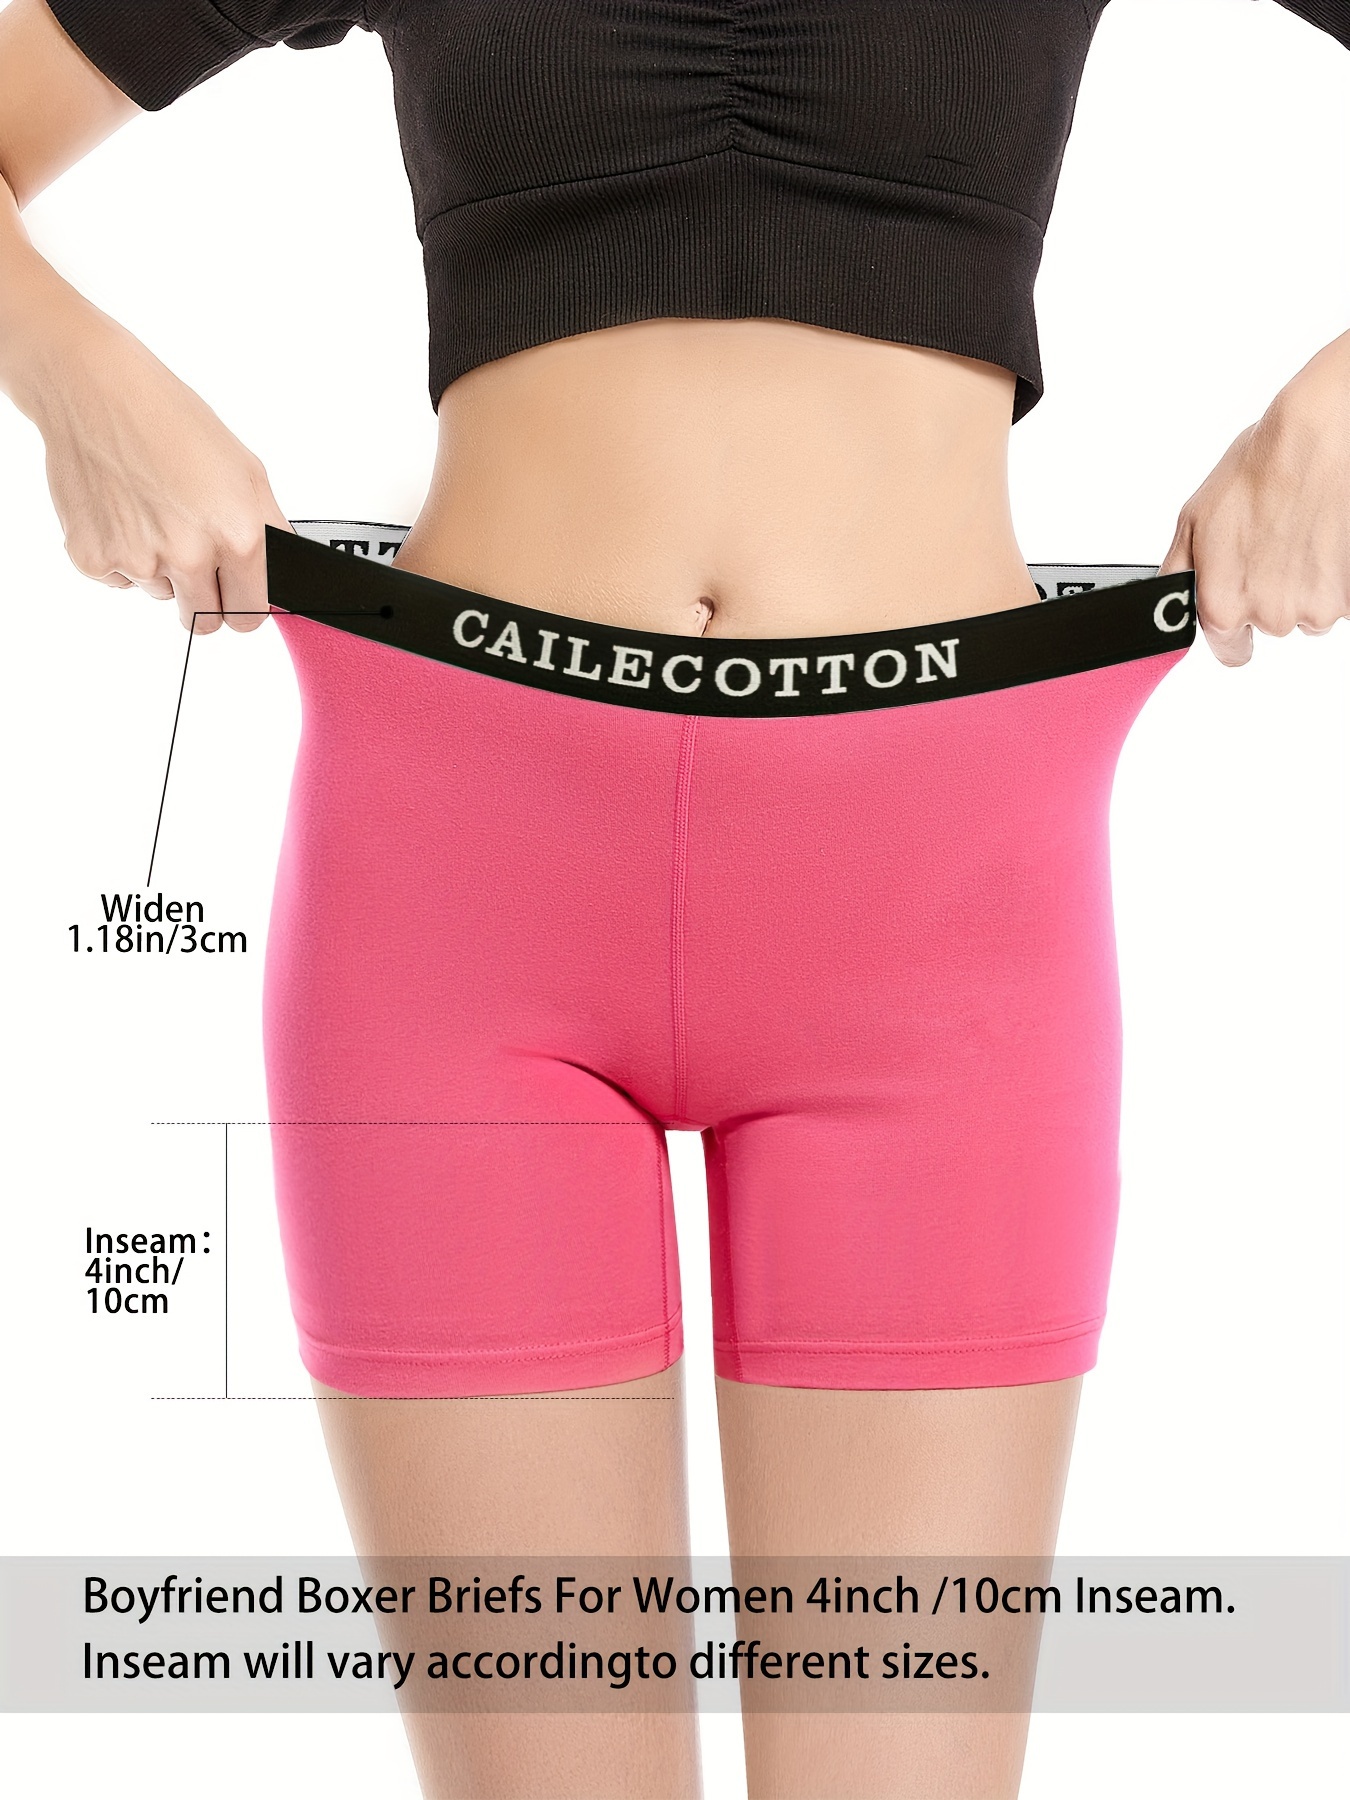 CAILECOTTON Cotton Underwear for Women - Panties for Women,Womens